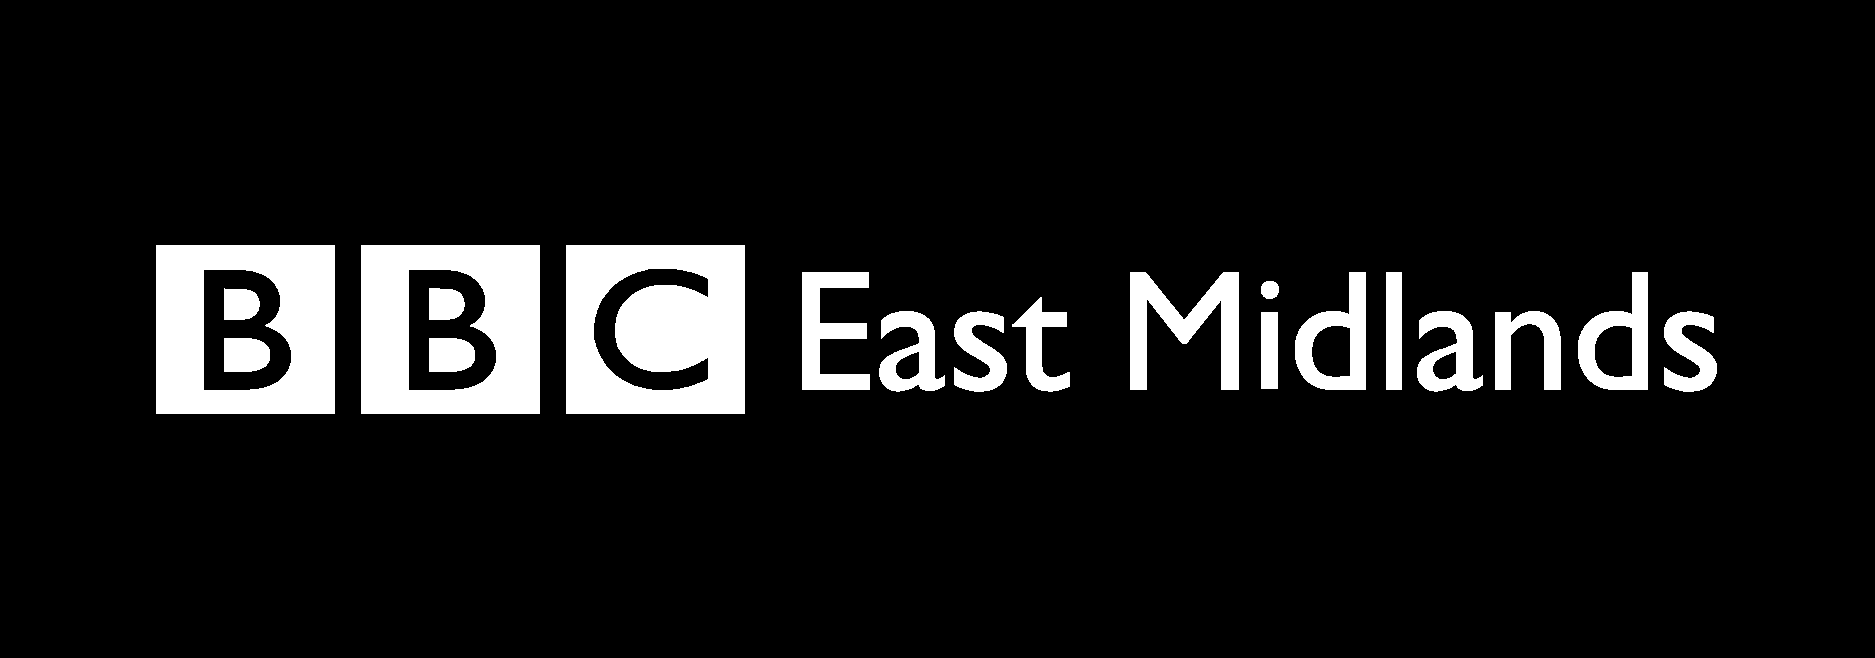 BBC East Midlands Logo Vector